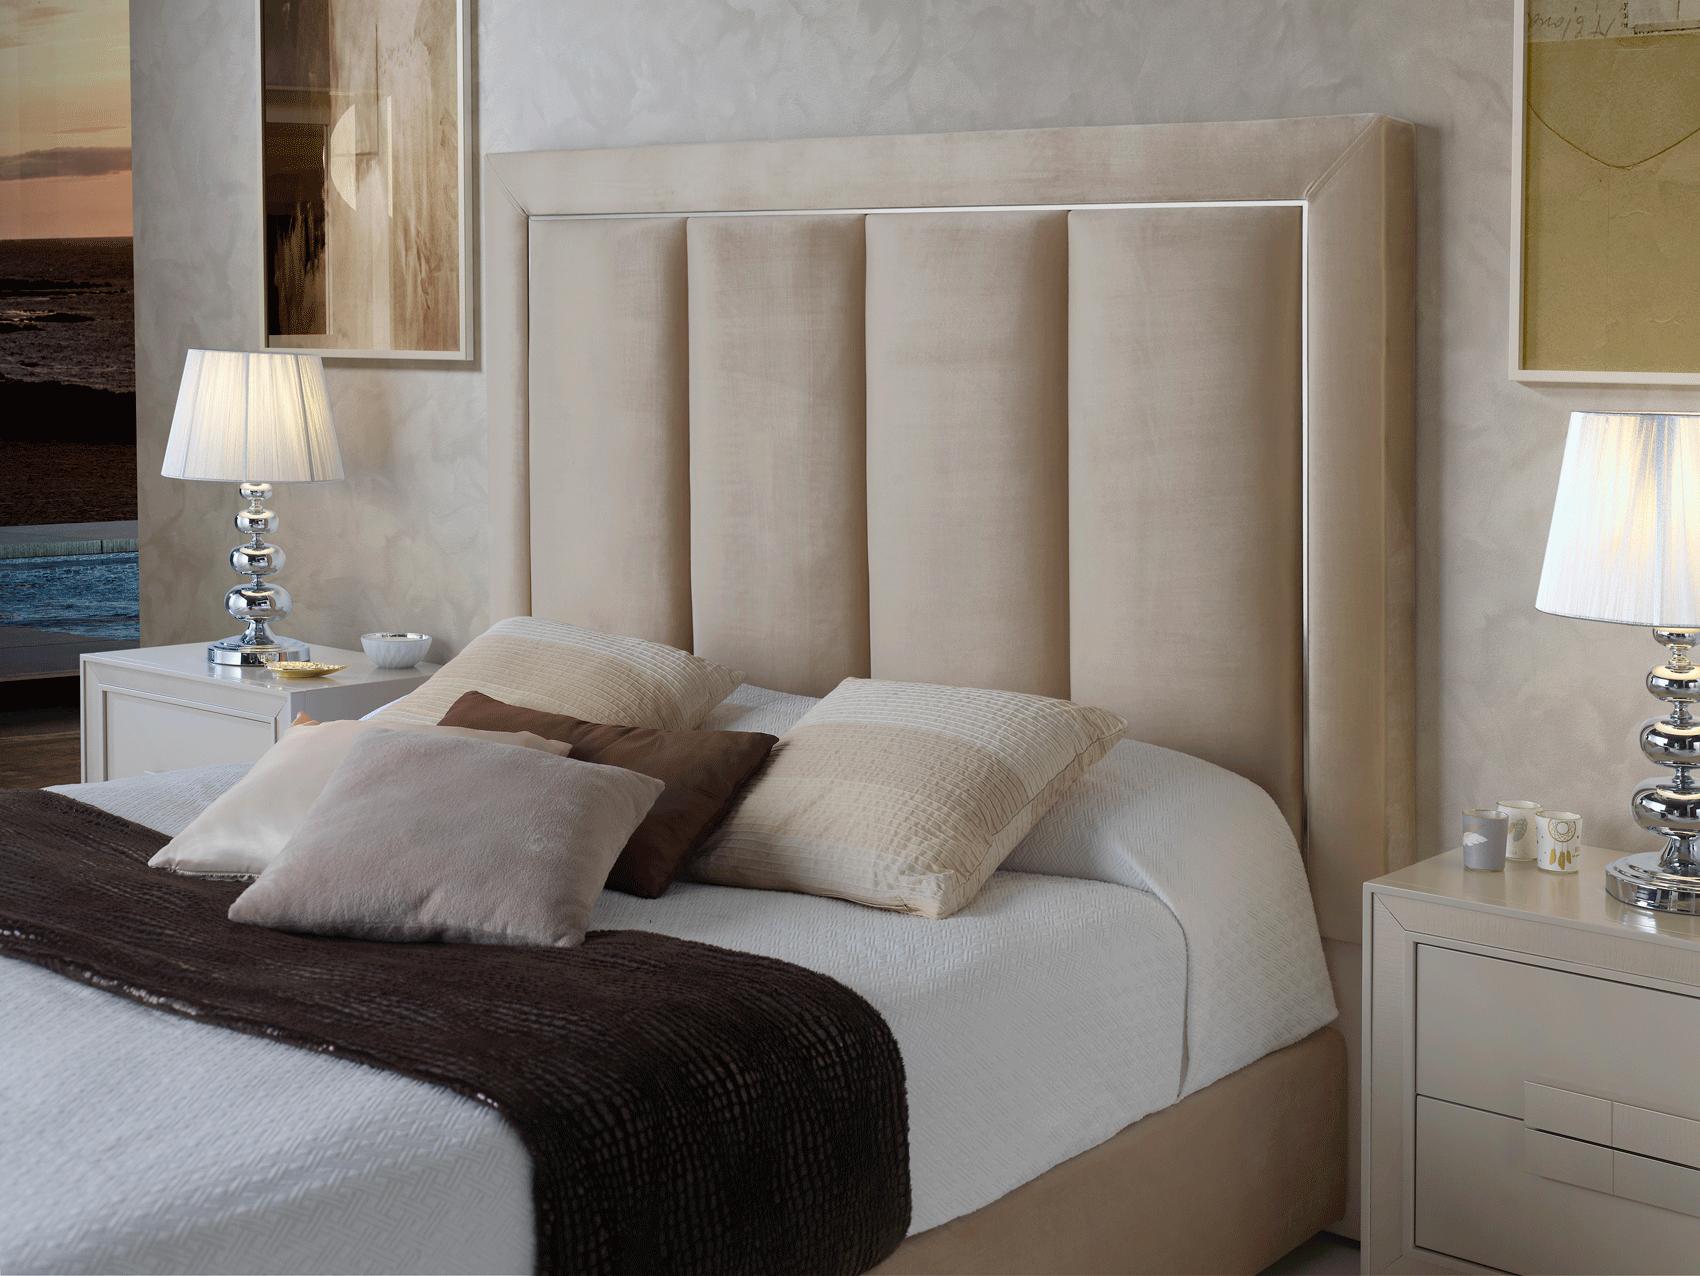 

    
Premium Beige Microfiber Upholstery King Bedroom Set 5Pcs Made in Spain ESF Monica
